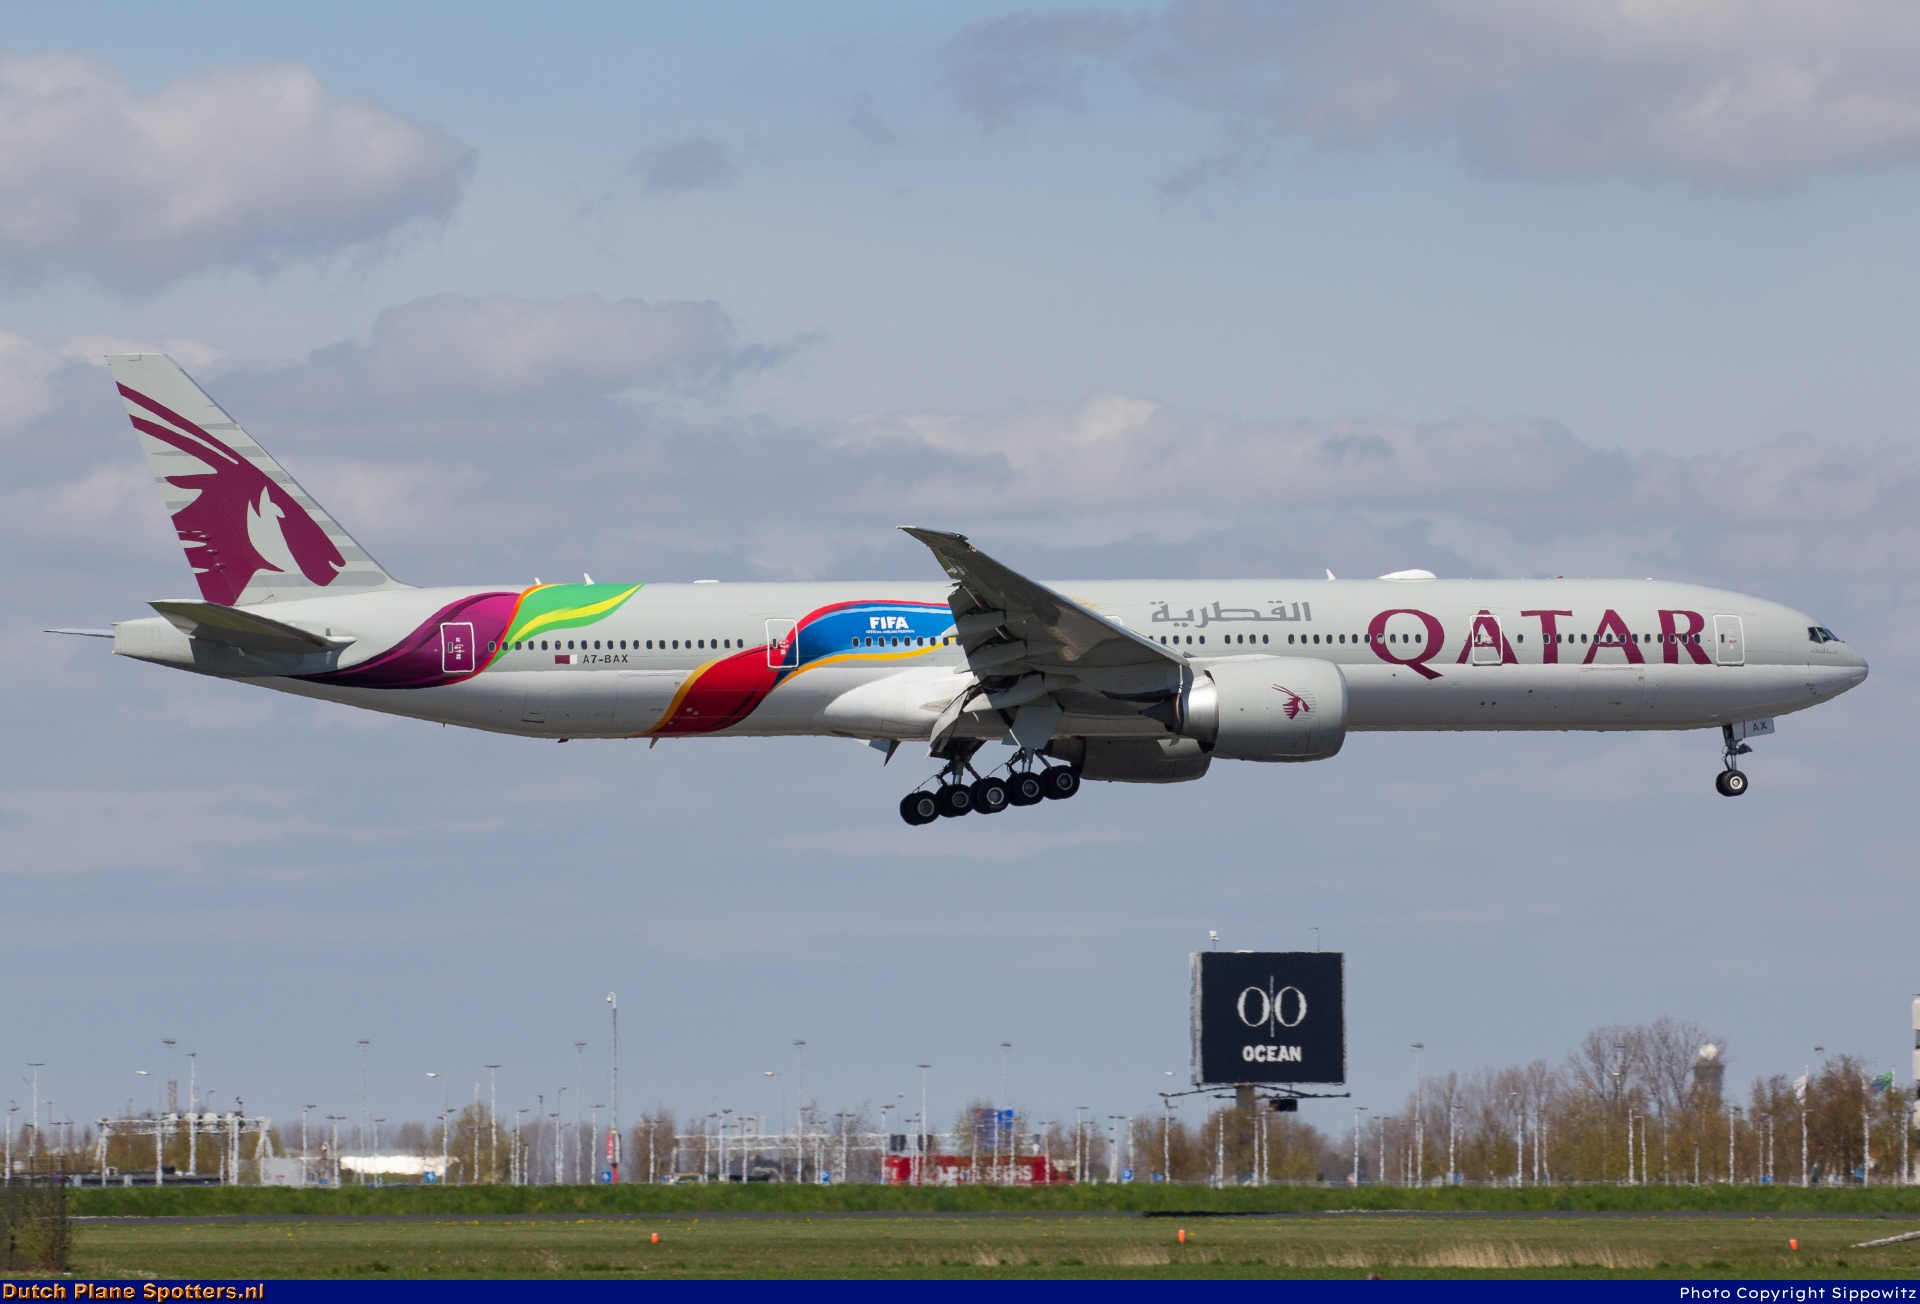 A7-BAX Boeing 777-300 Qatar Airways by Sippowitz